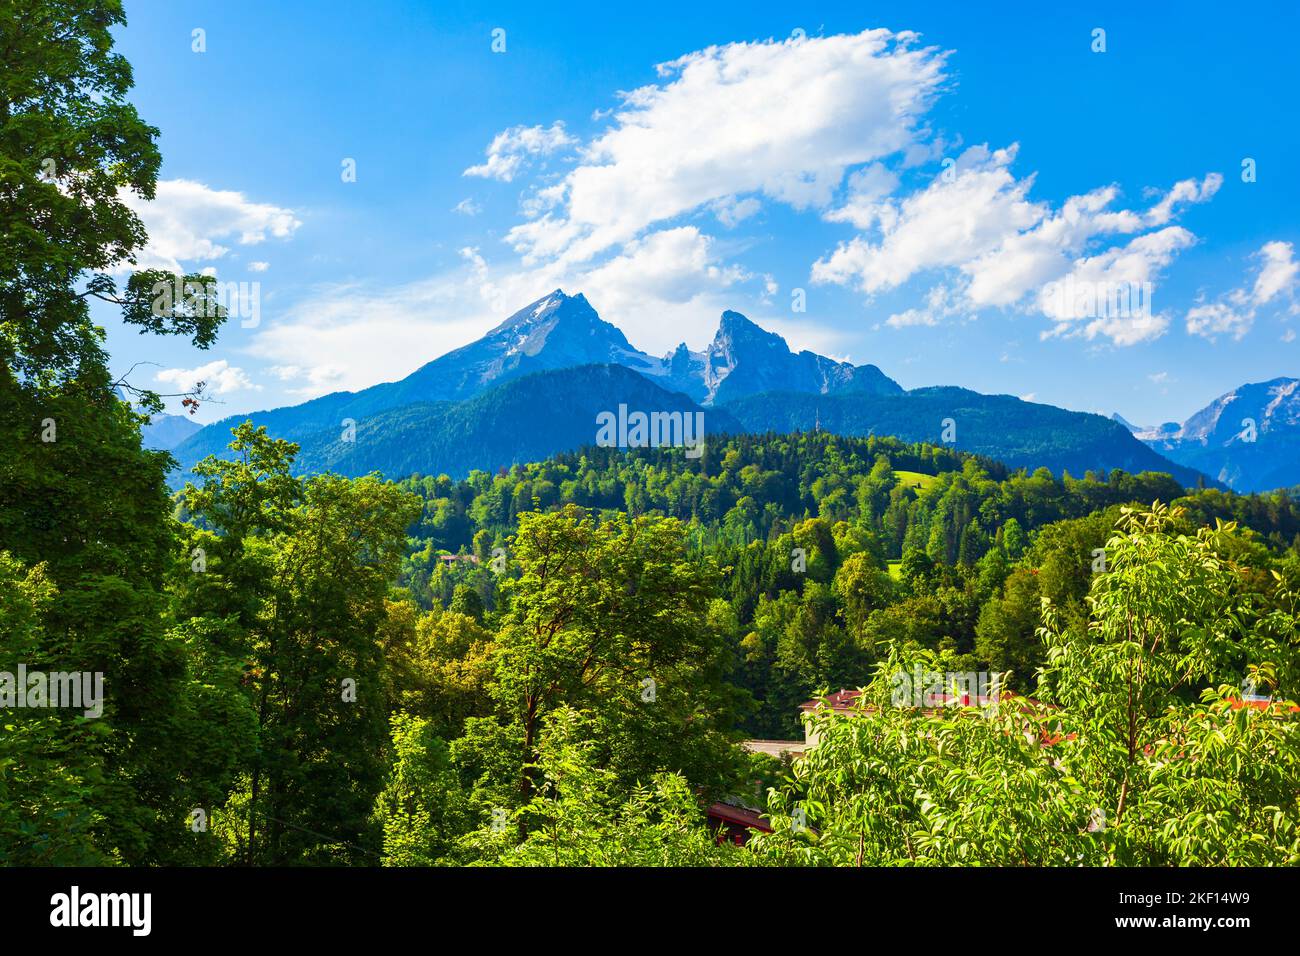 he Watzmann is a mountain in the Bavarian Alps near the Berchtesgaden village. The Watzmann is the third highest in Germany. Stock Photo